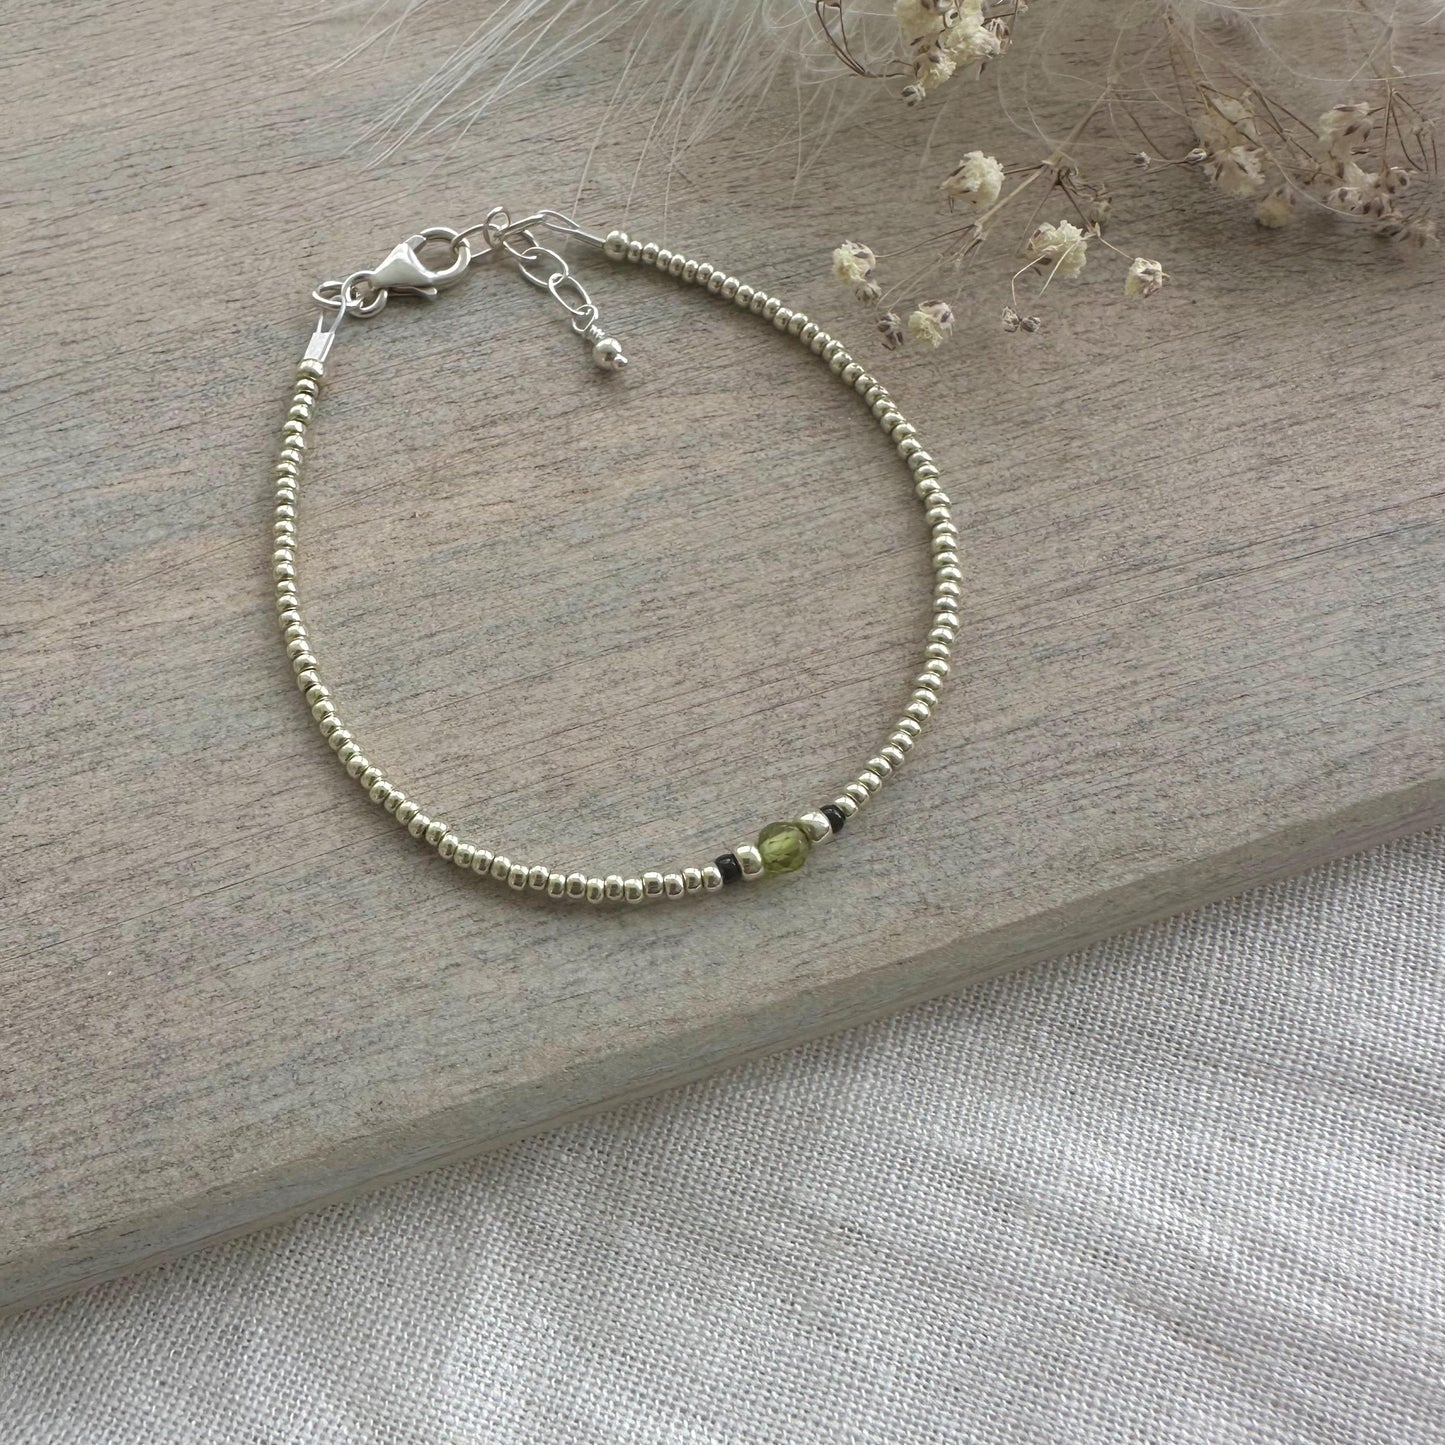 August Birthstone seed bead bracelet, peridot jewellery